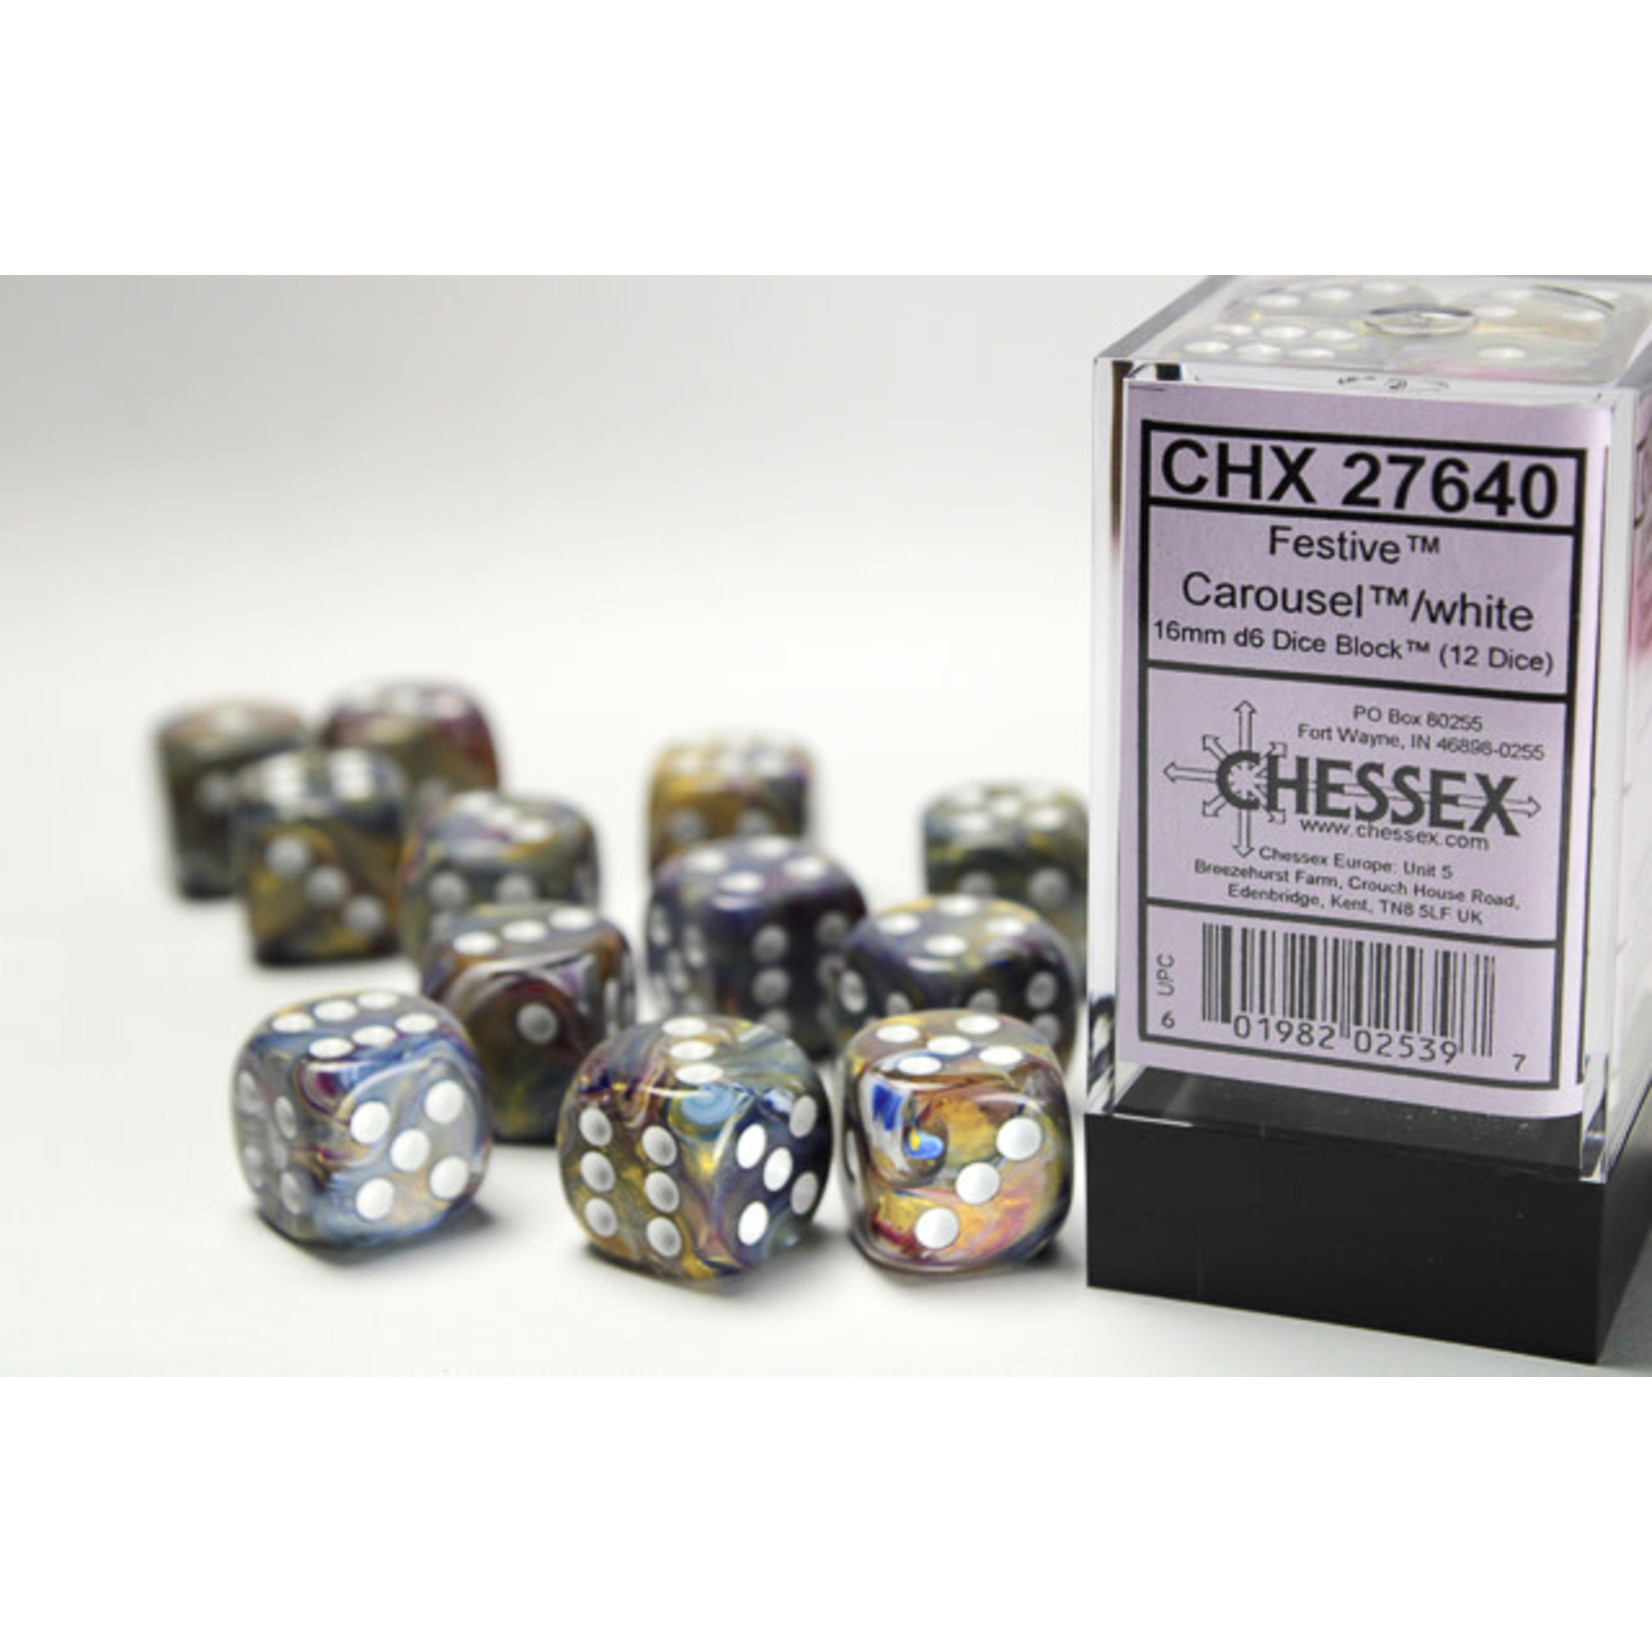 chessex Chessex Festive  12D6 Carousel/White